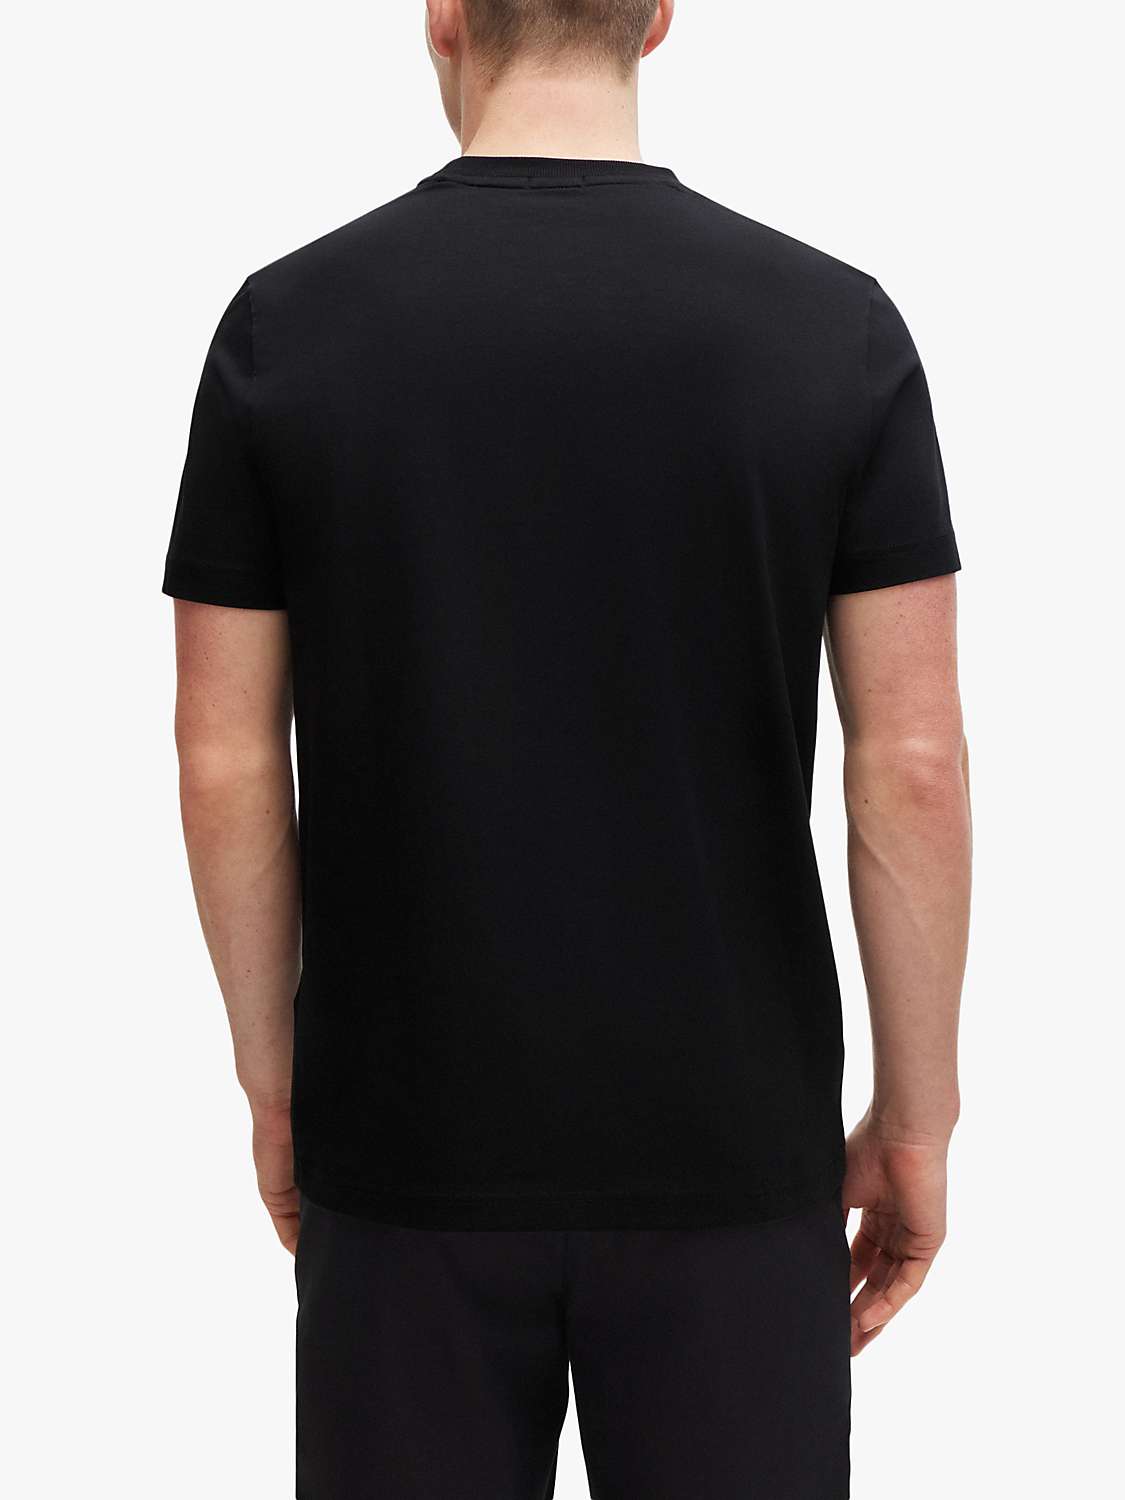 Buy BOSS Small Logo T-Shirt, Black Online at johnlewis.com